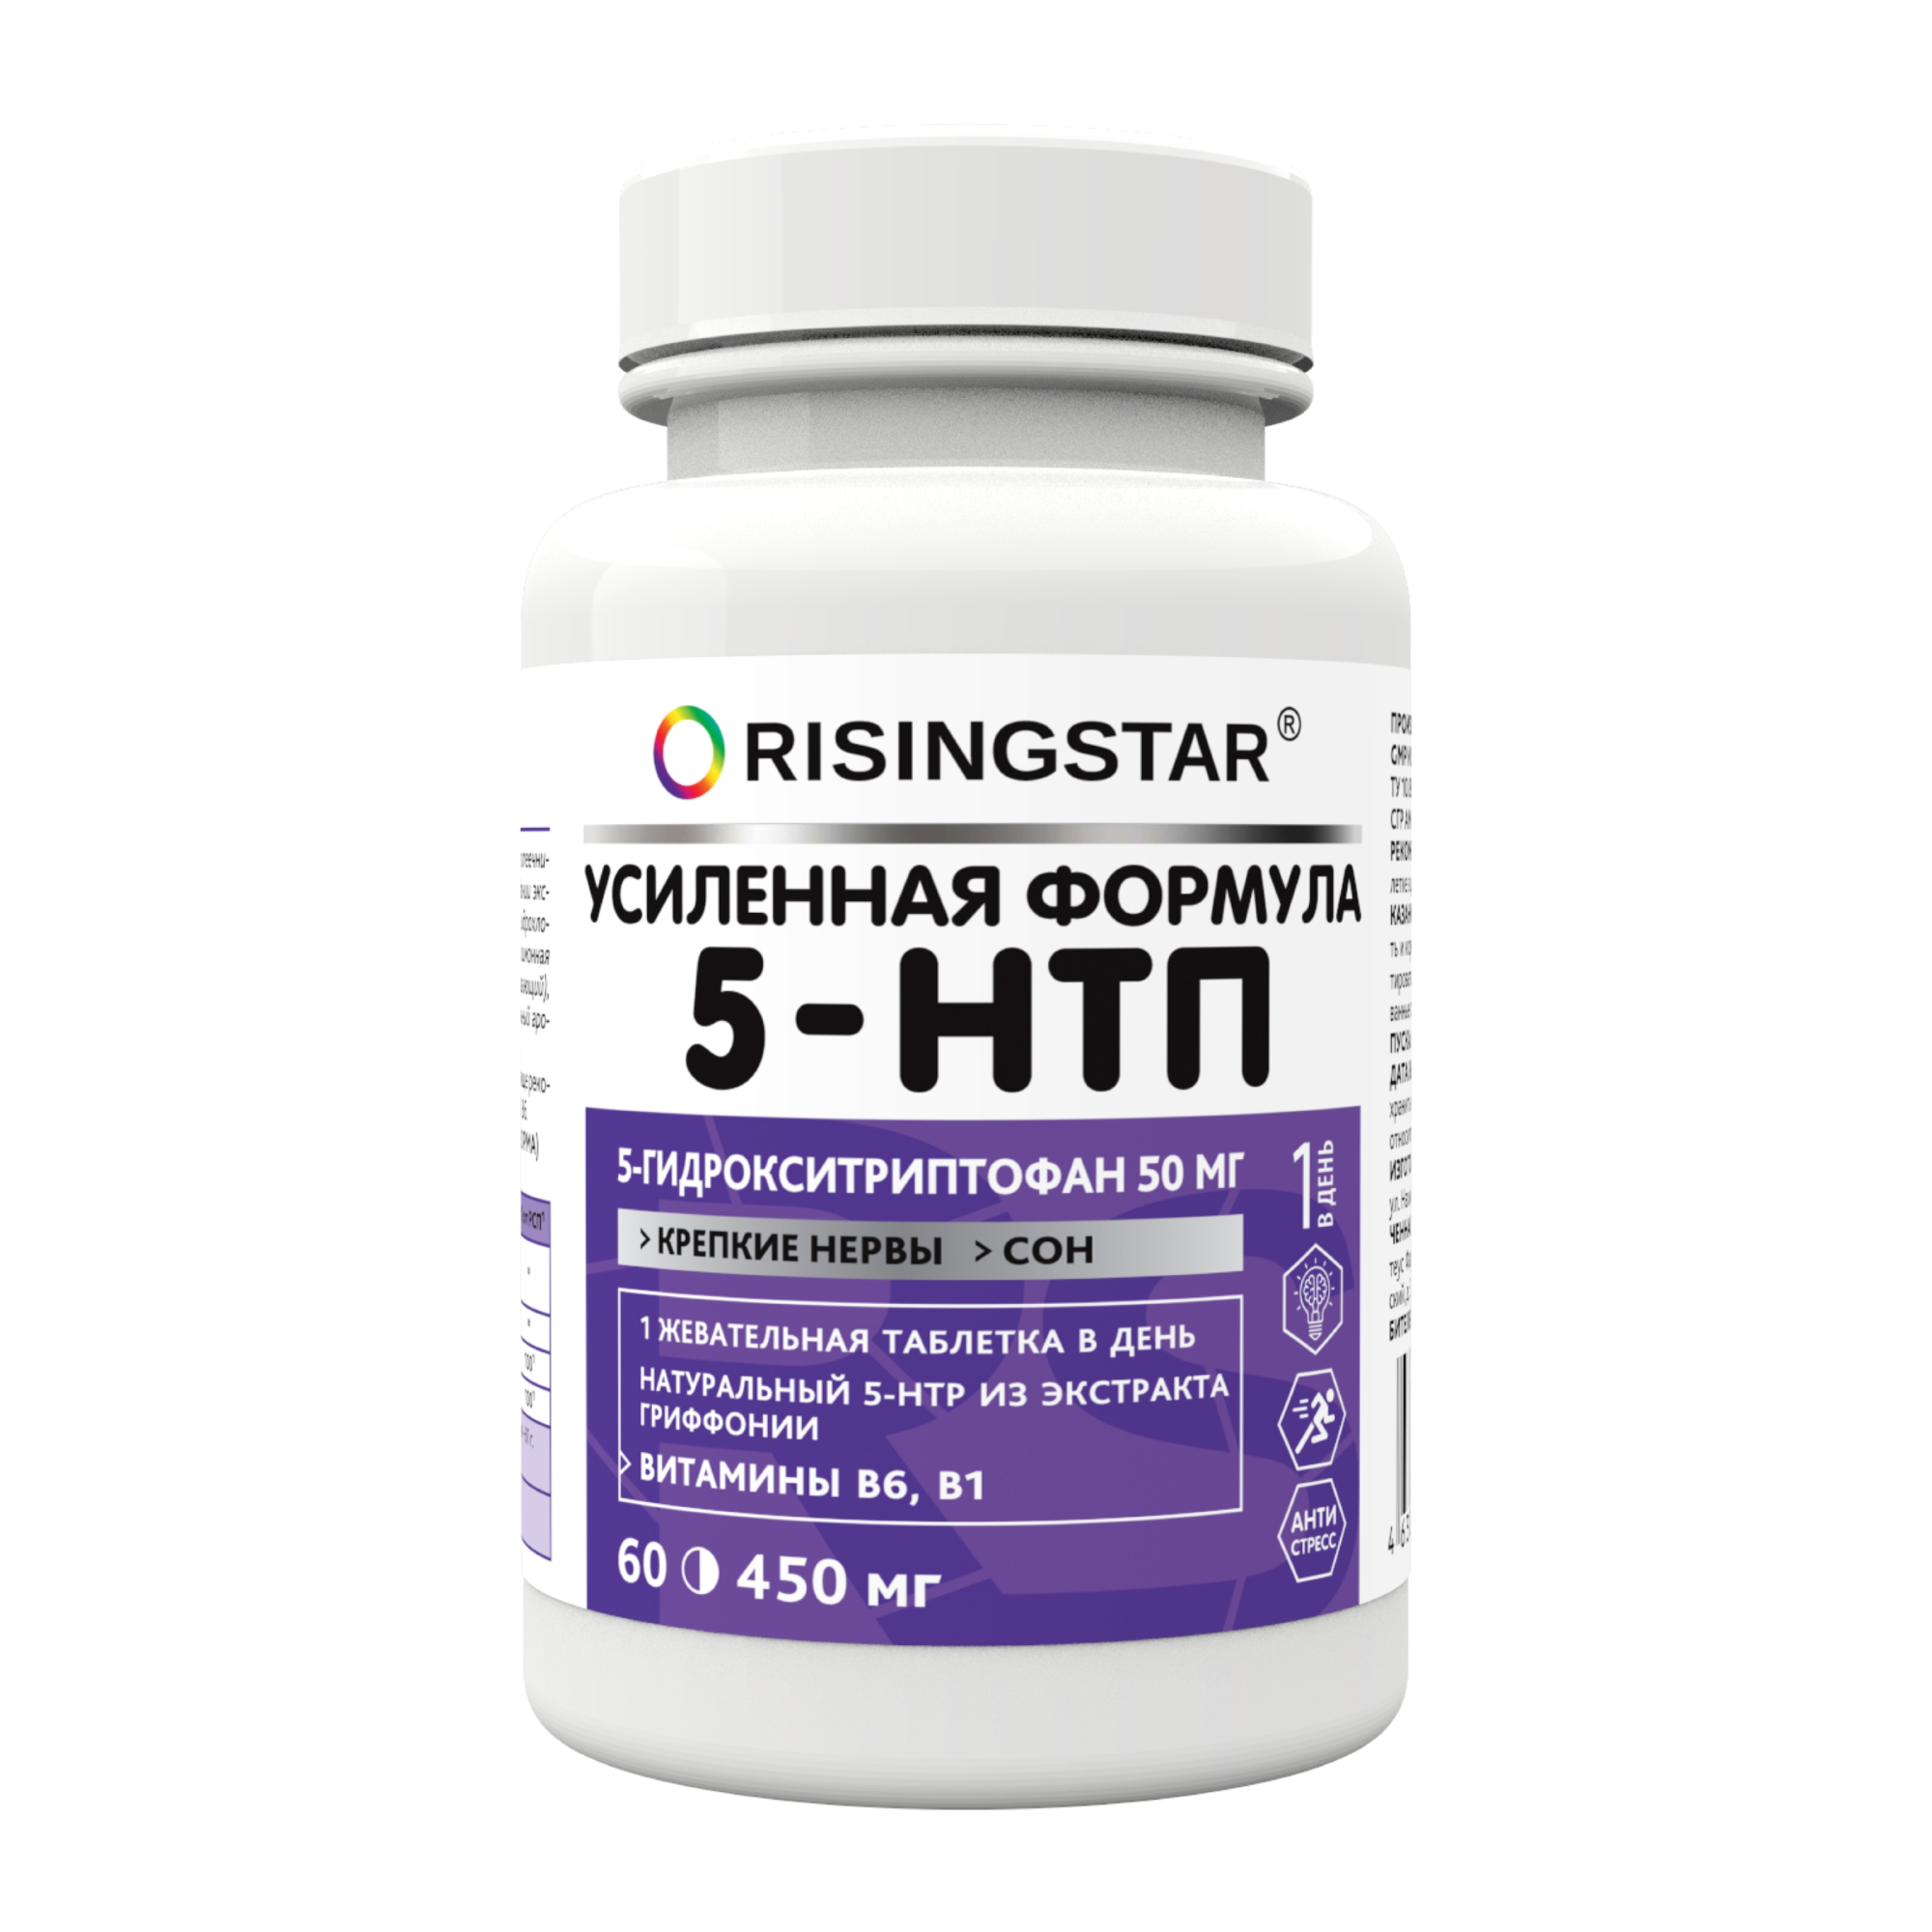 БАД Risingstar 5-htp альпиграс 60 таблеток, 60 г